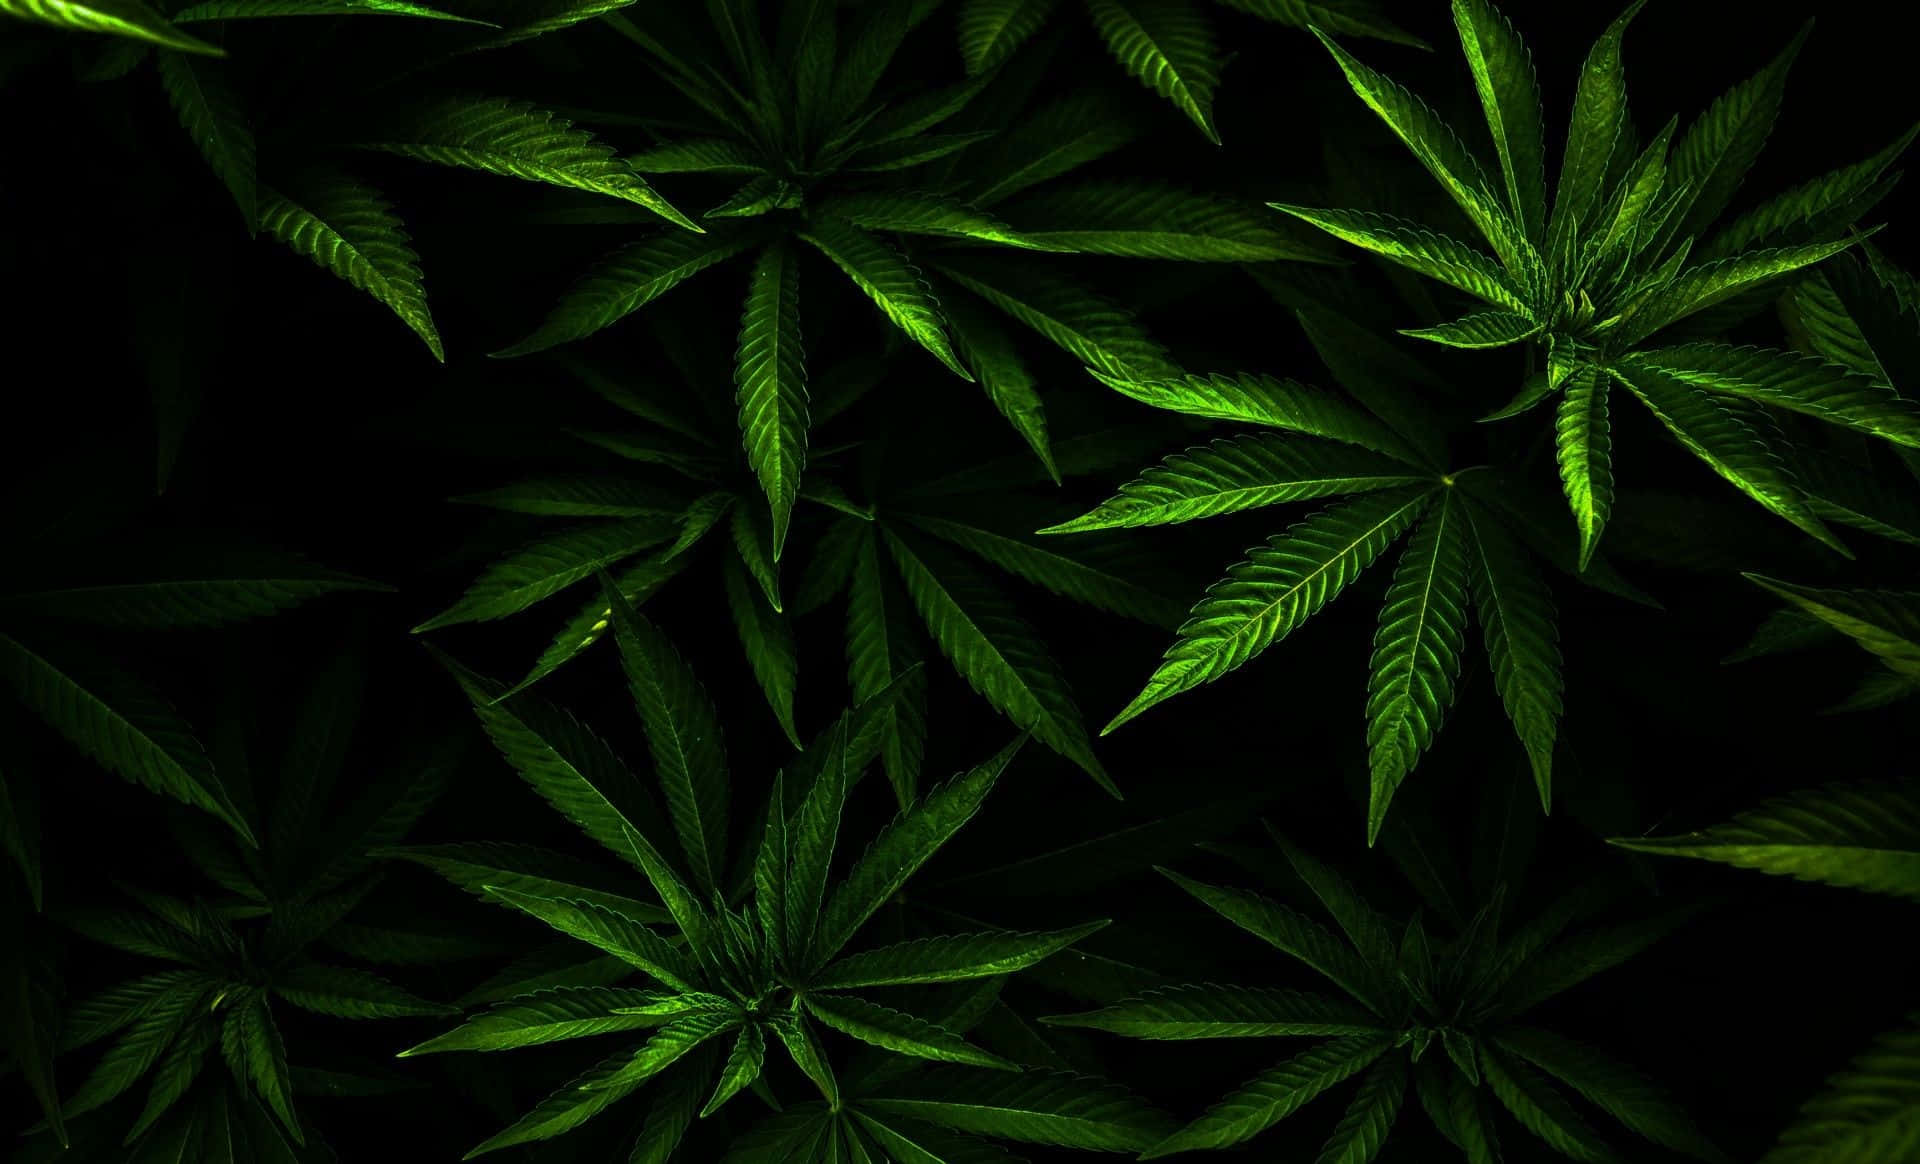 Aesthetic Marijuana Leaves on a Vibrant Background